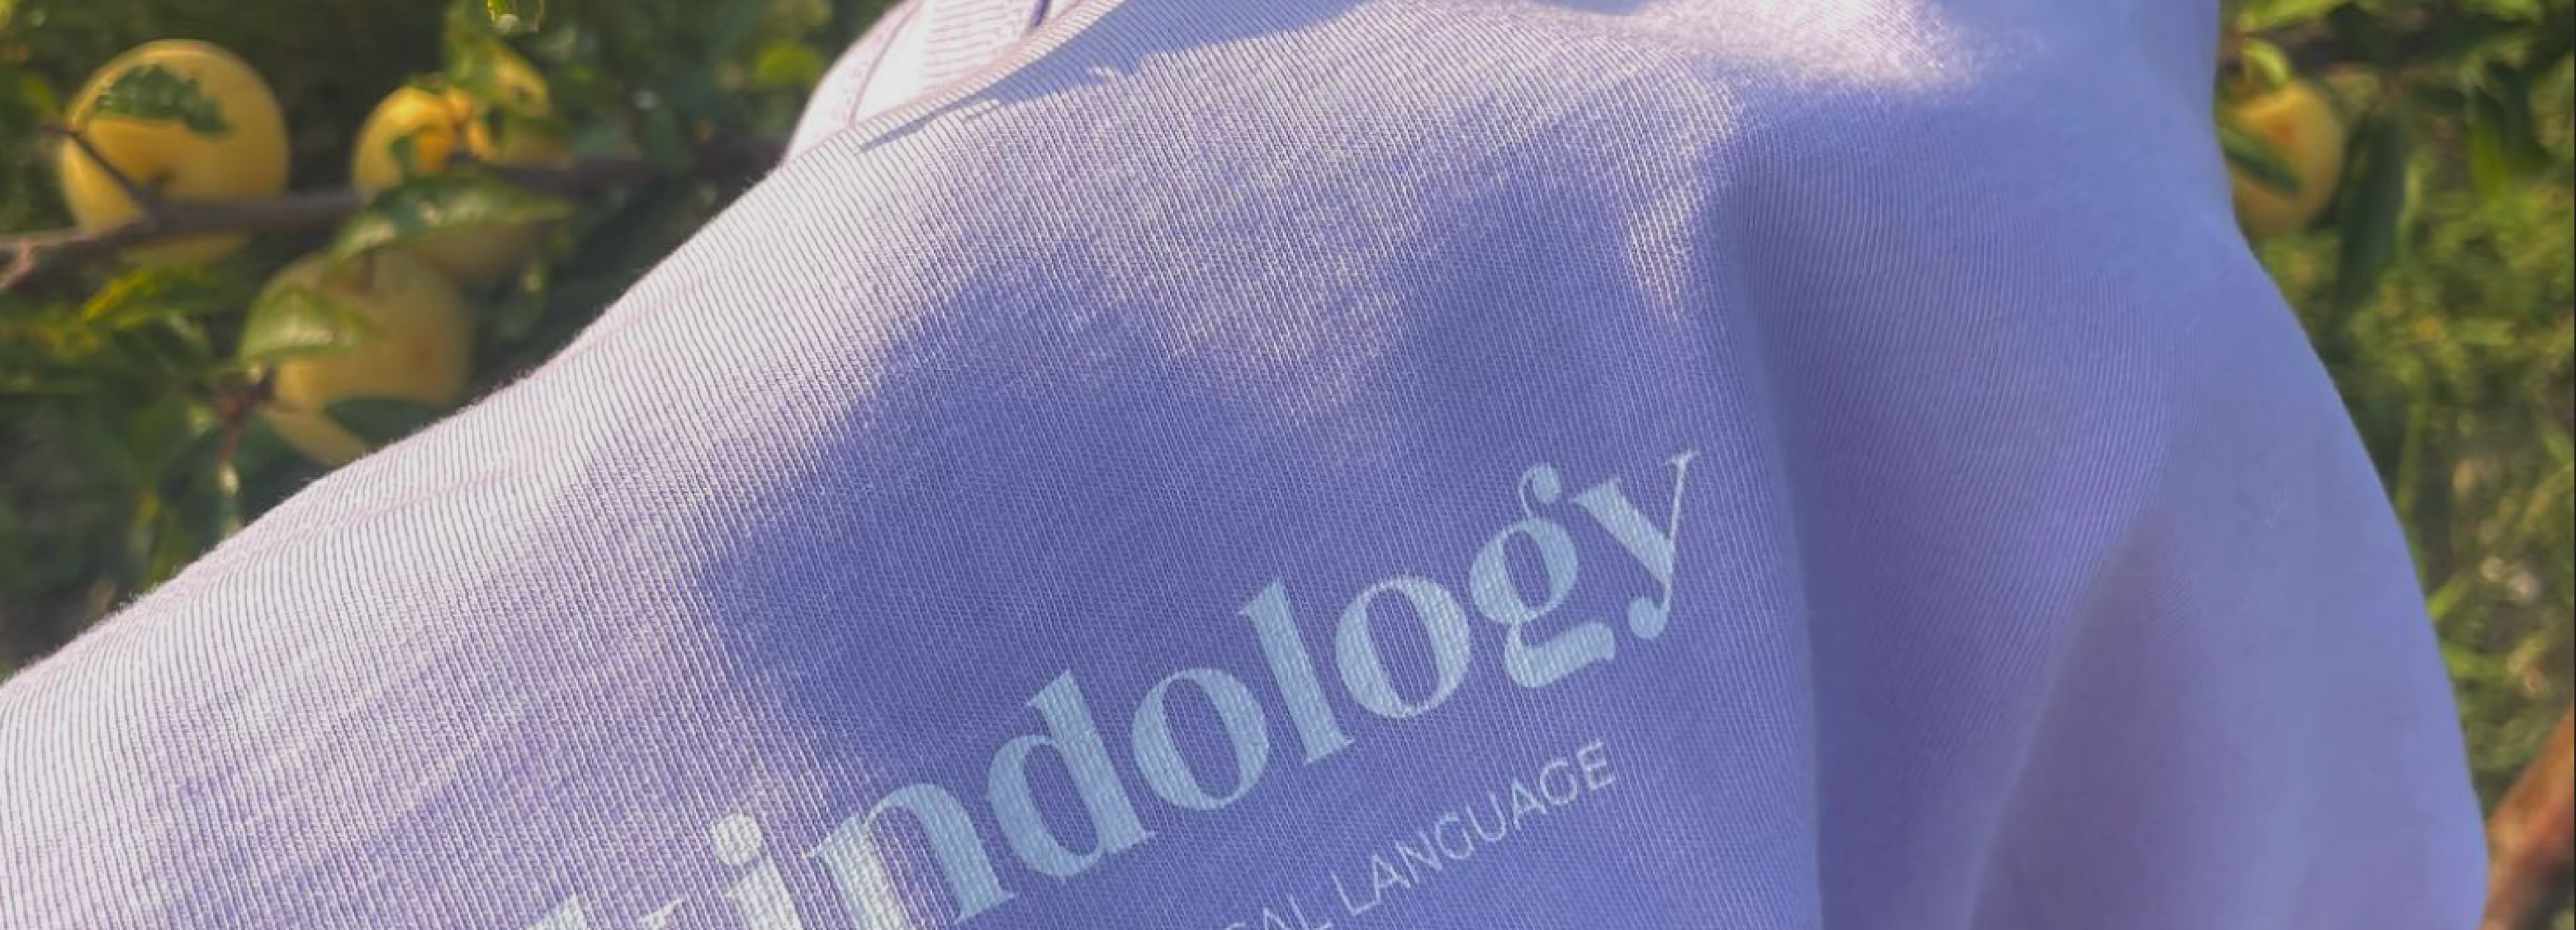 purple sweatshirt with the sentence "kindology is a universal language"